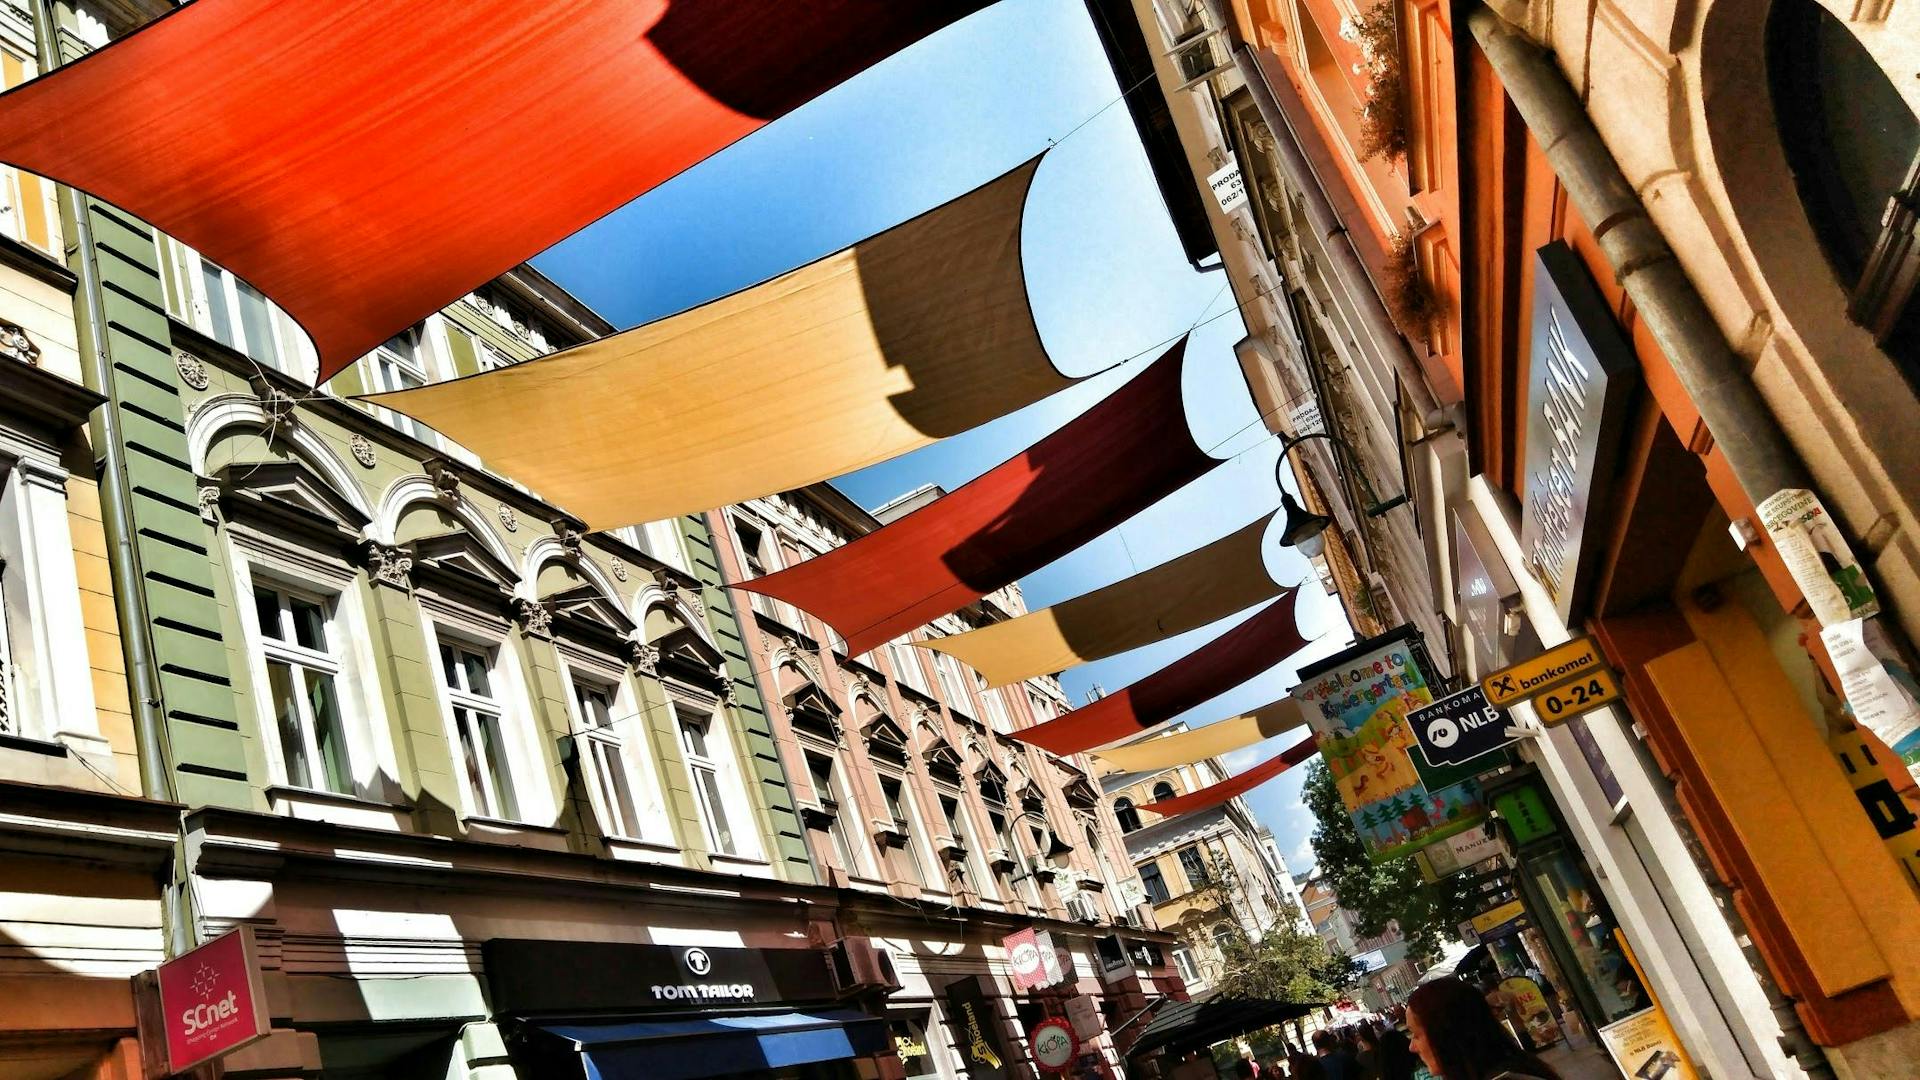 A colourful street.